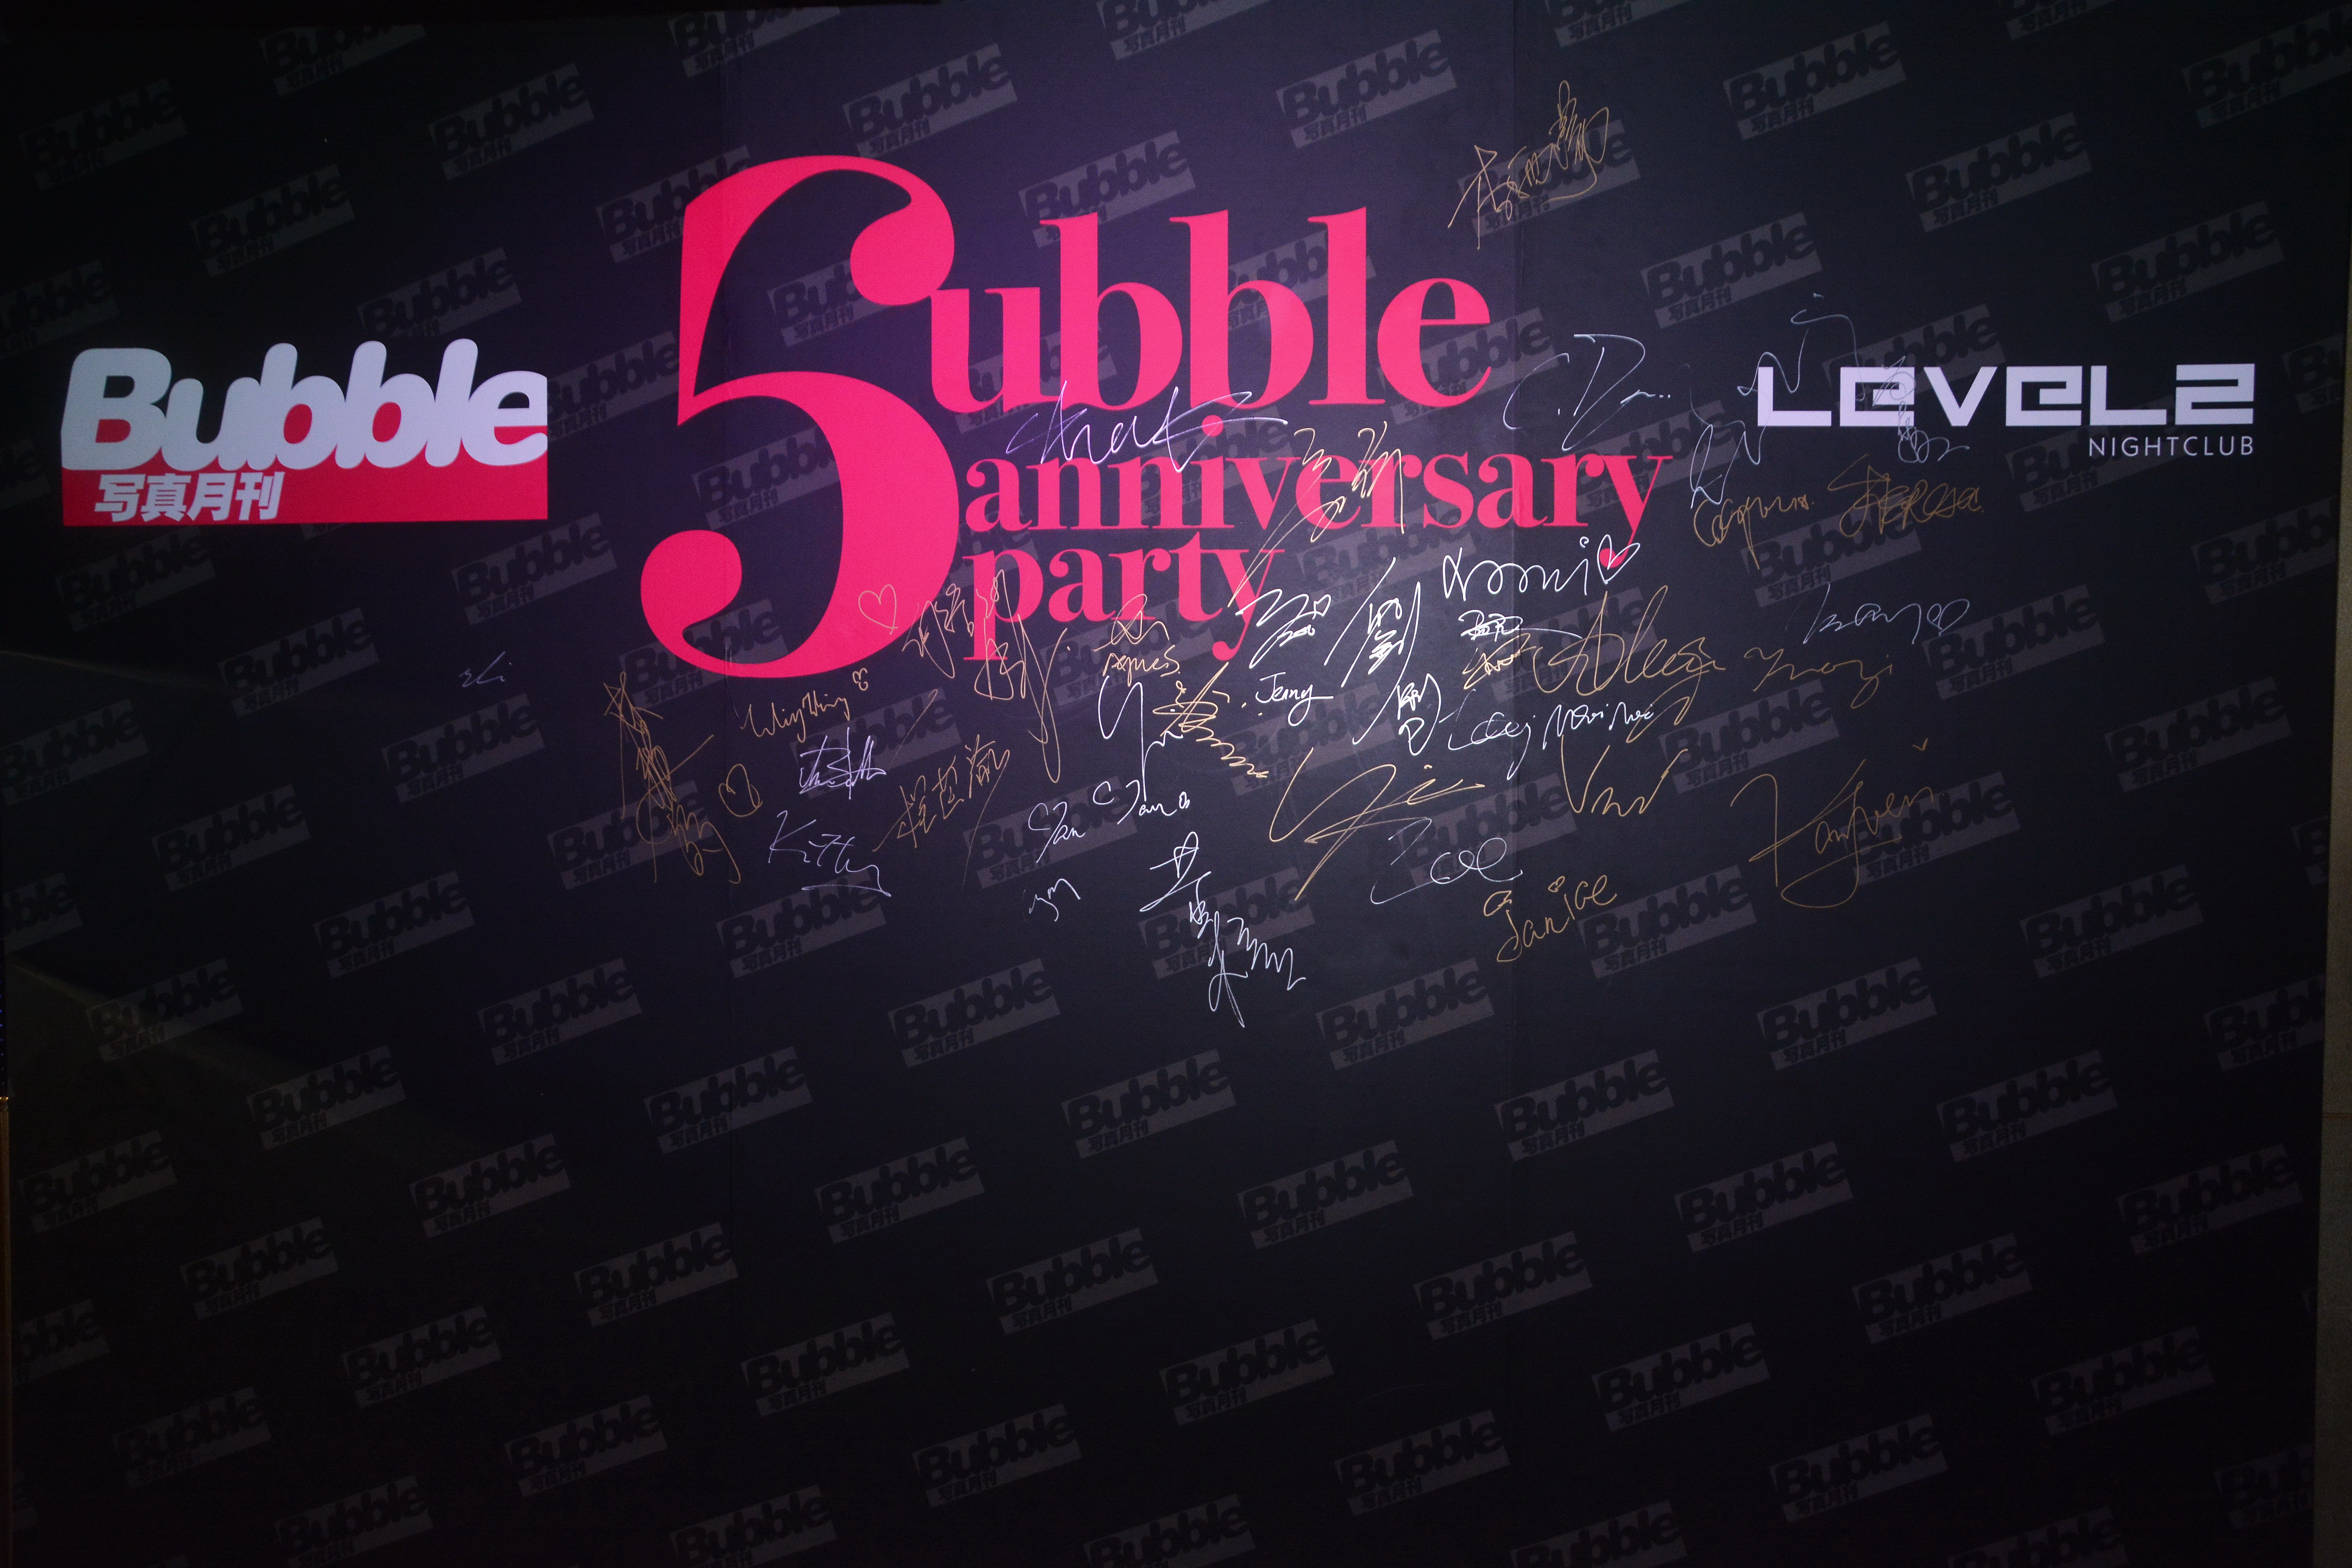 Chris Chan之攝影師紀錄: Bubble寫真月刊5周年慶祝派對